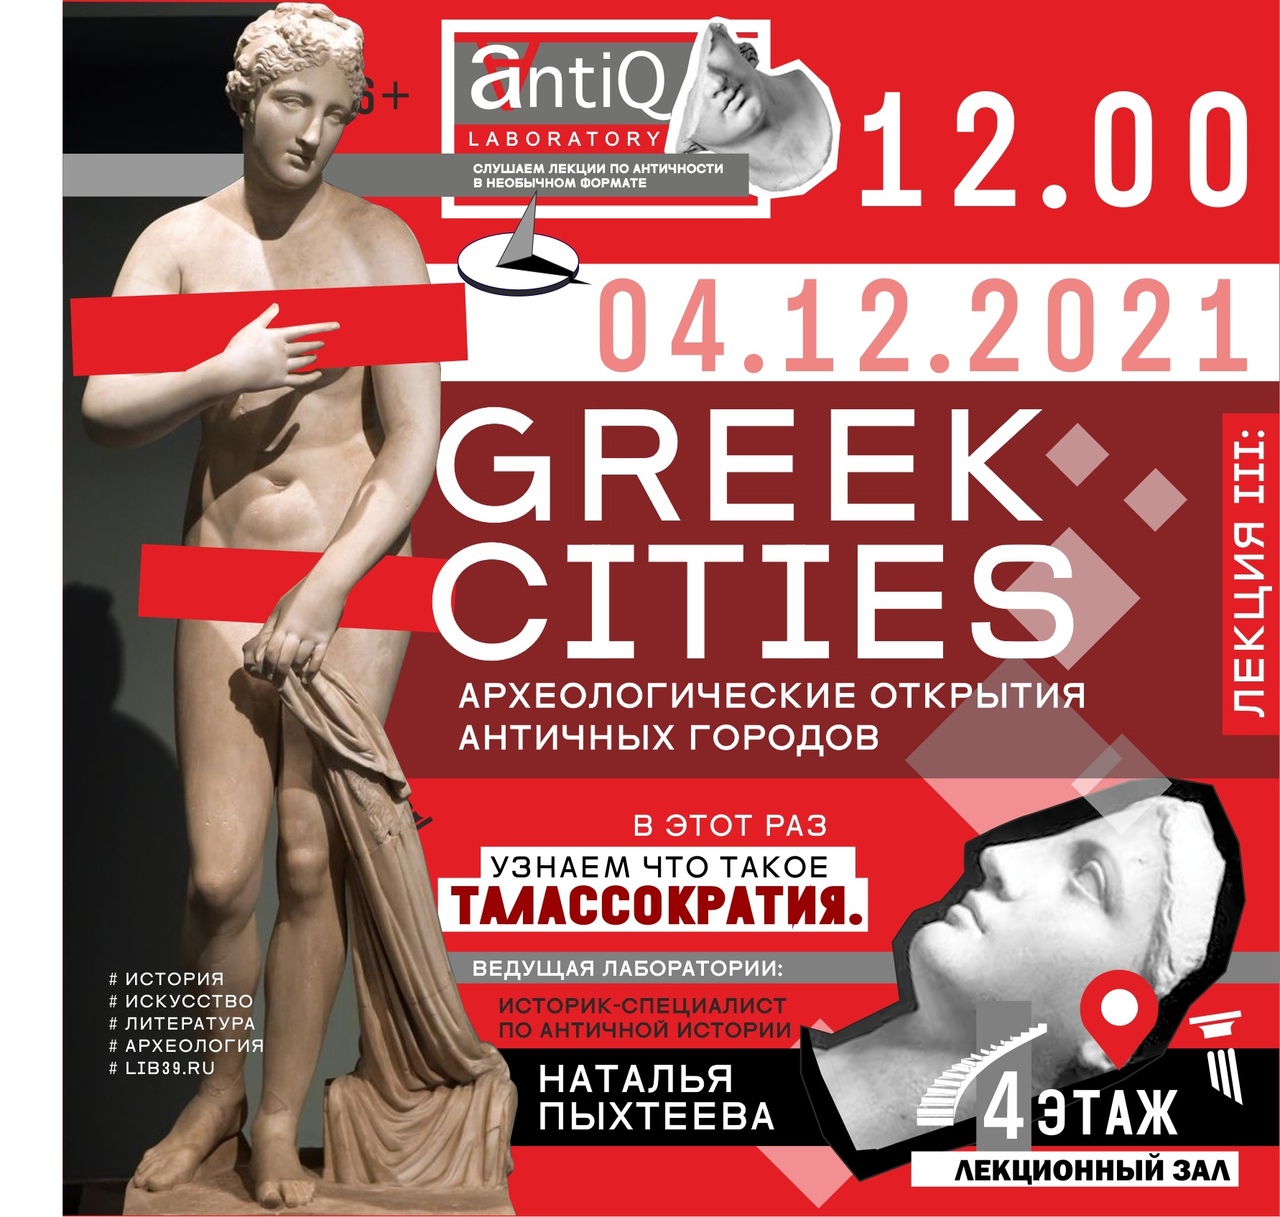 AntiQ Laboratory: История античной археологии